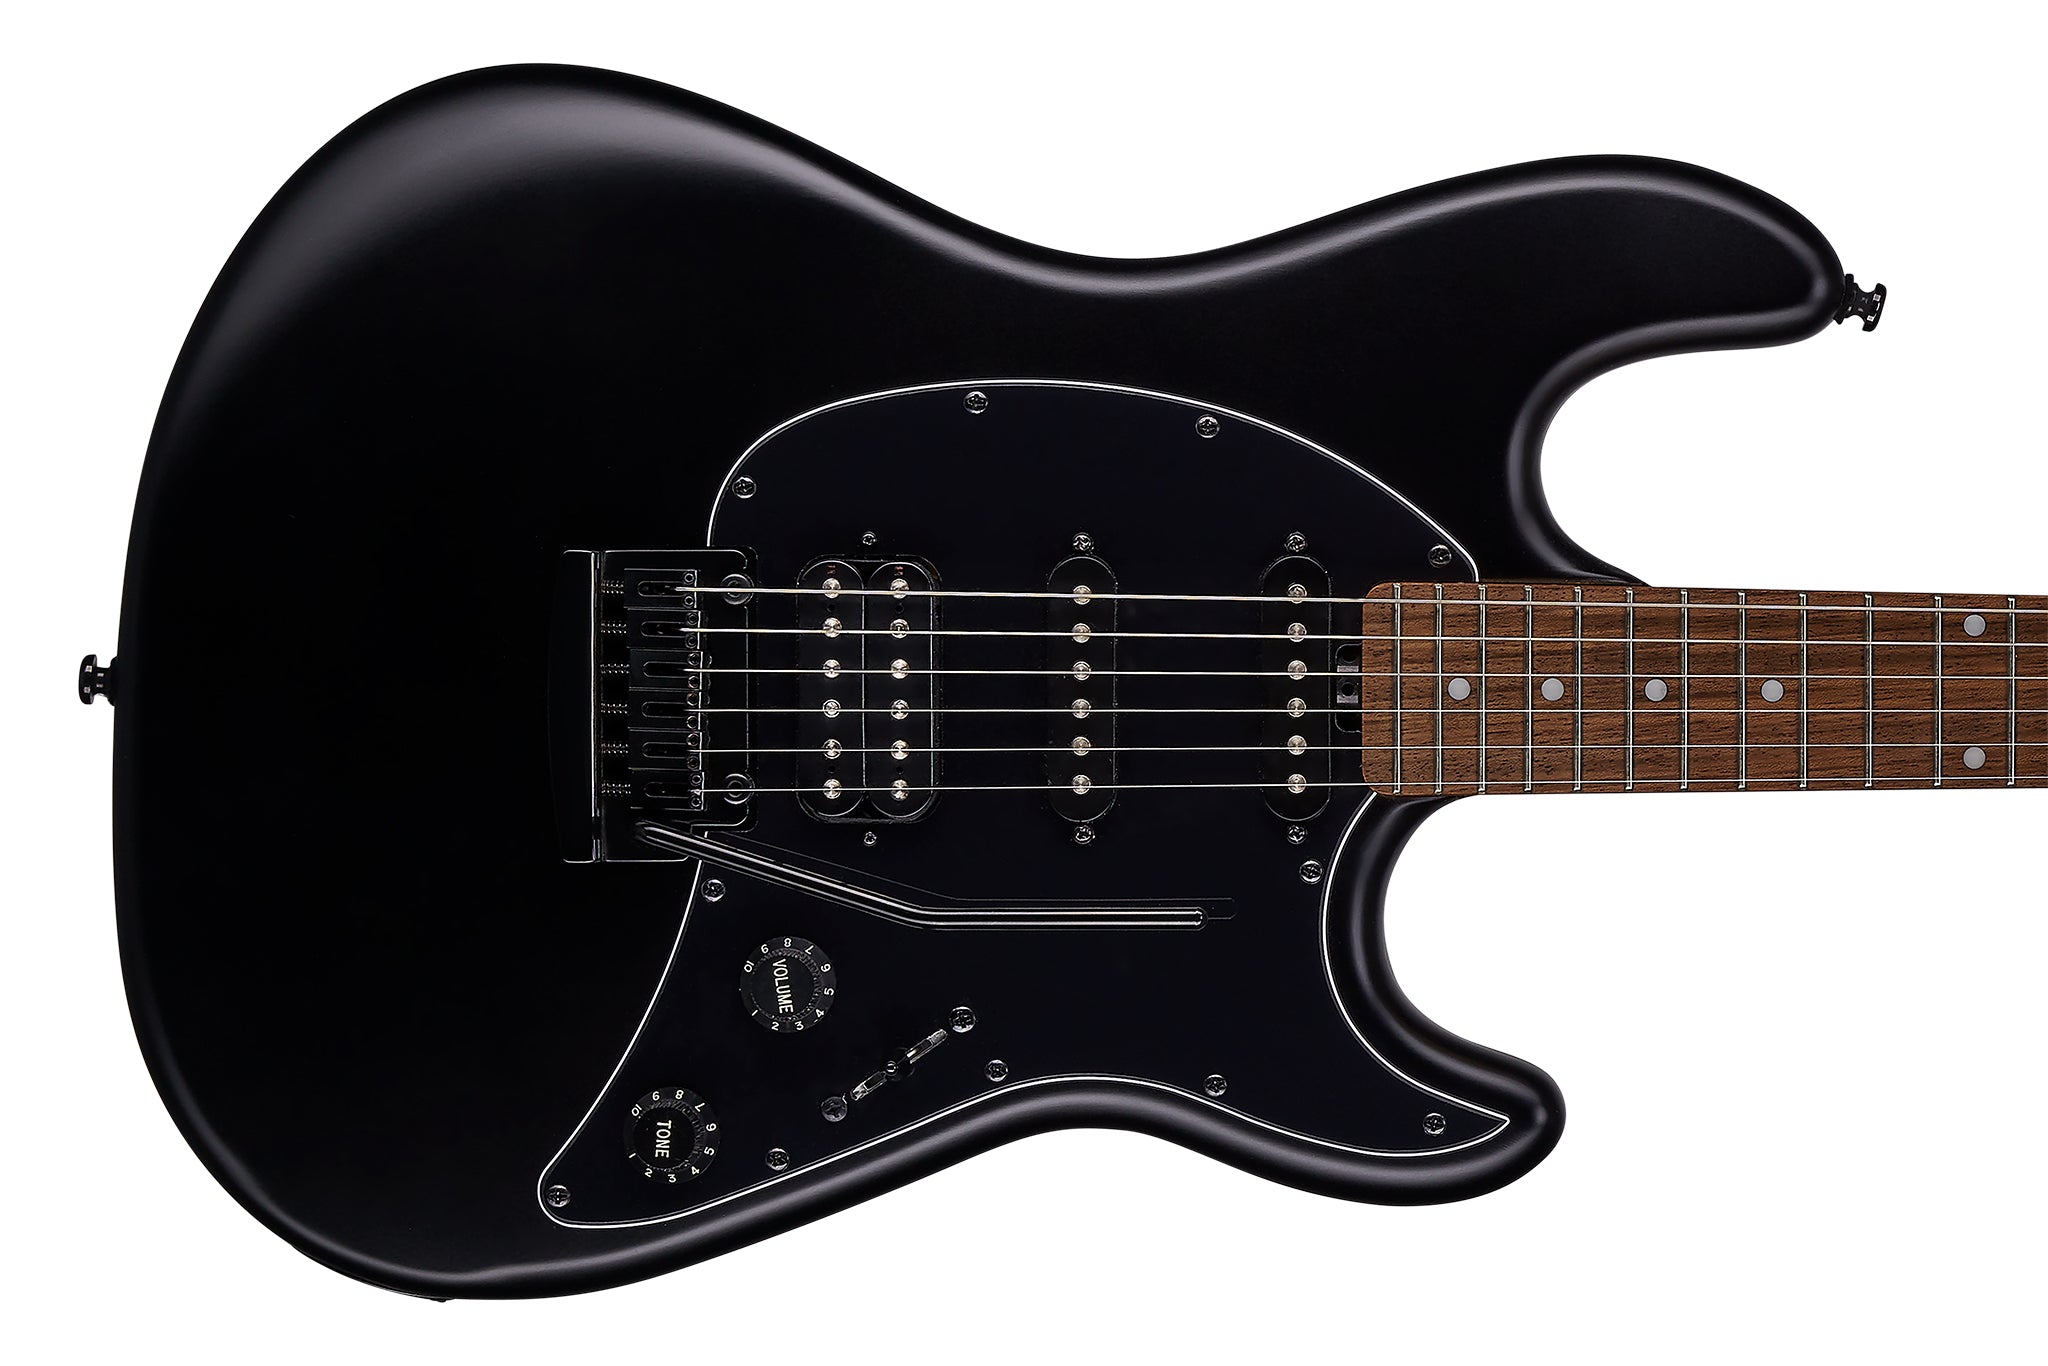 Sterling Music Man CT30HSS Cutlass Stealth Black Electric Guitar "ZAPPA"